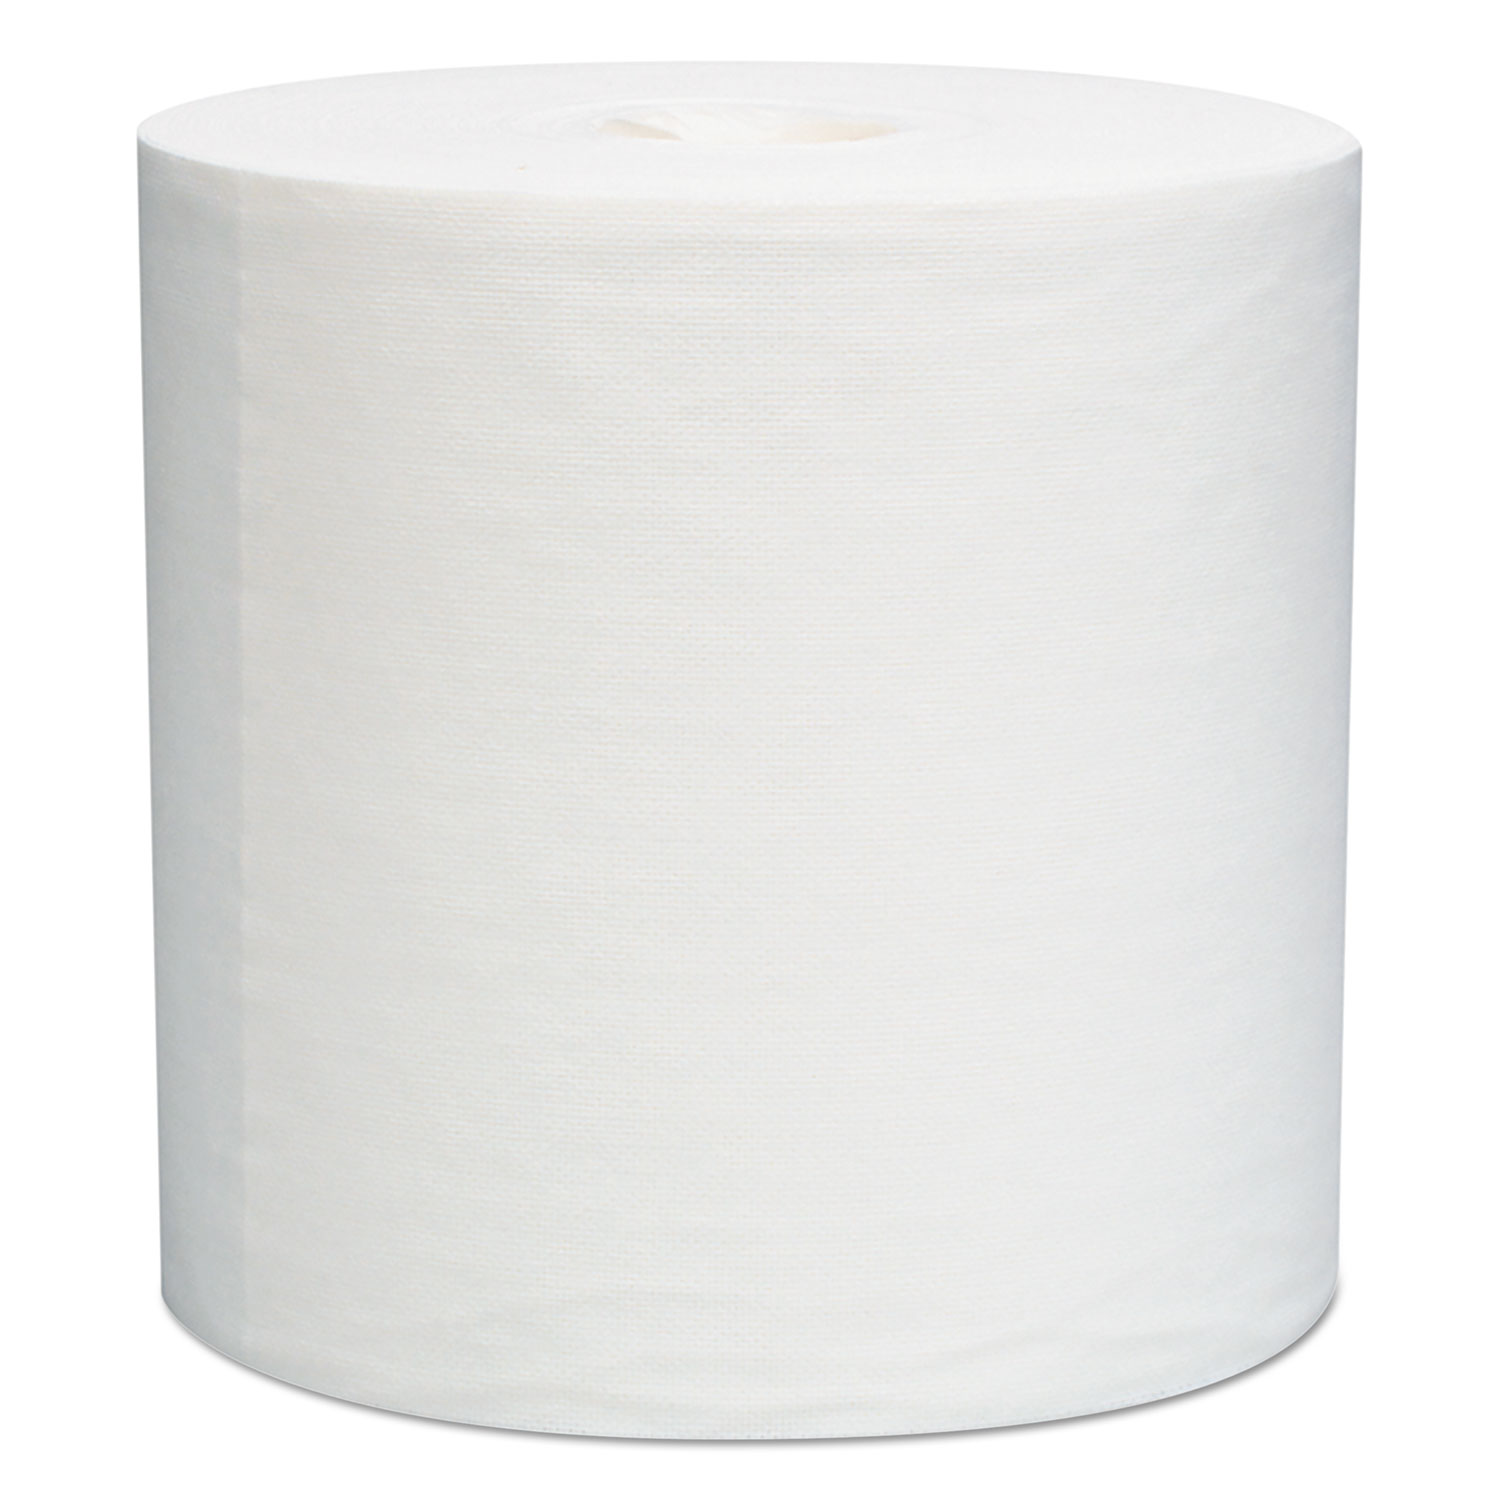  WypAll 5830 L30 Towels, Center-Pull Roll, 8 x 15, White, 150/Roll, 6 Rolls/Carton (KCC05830) 